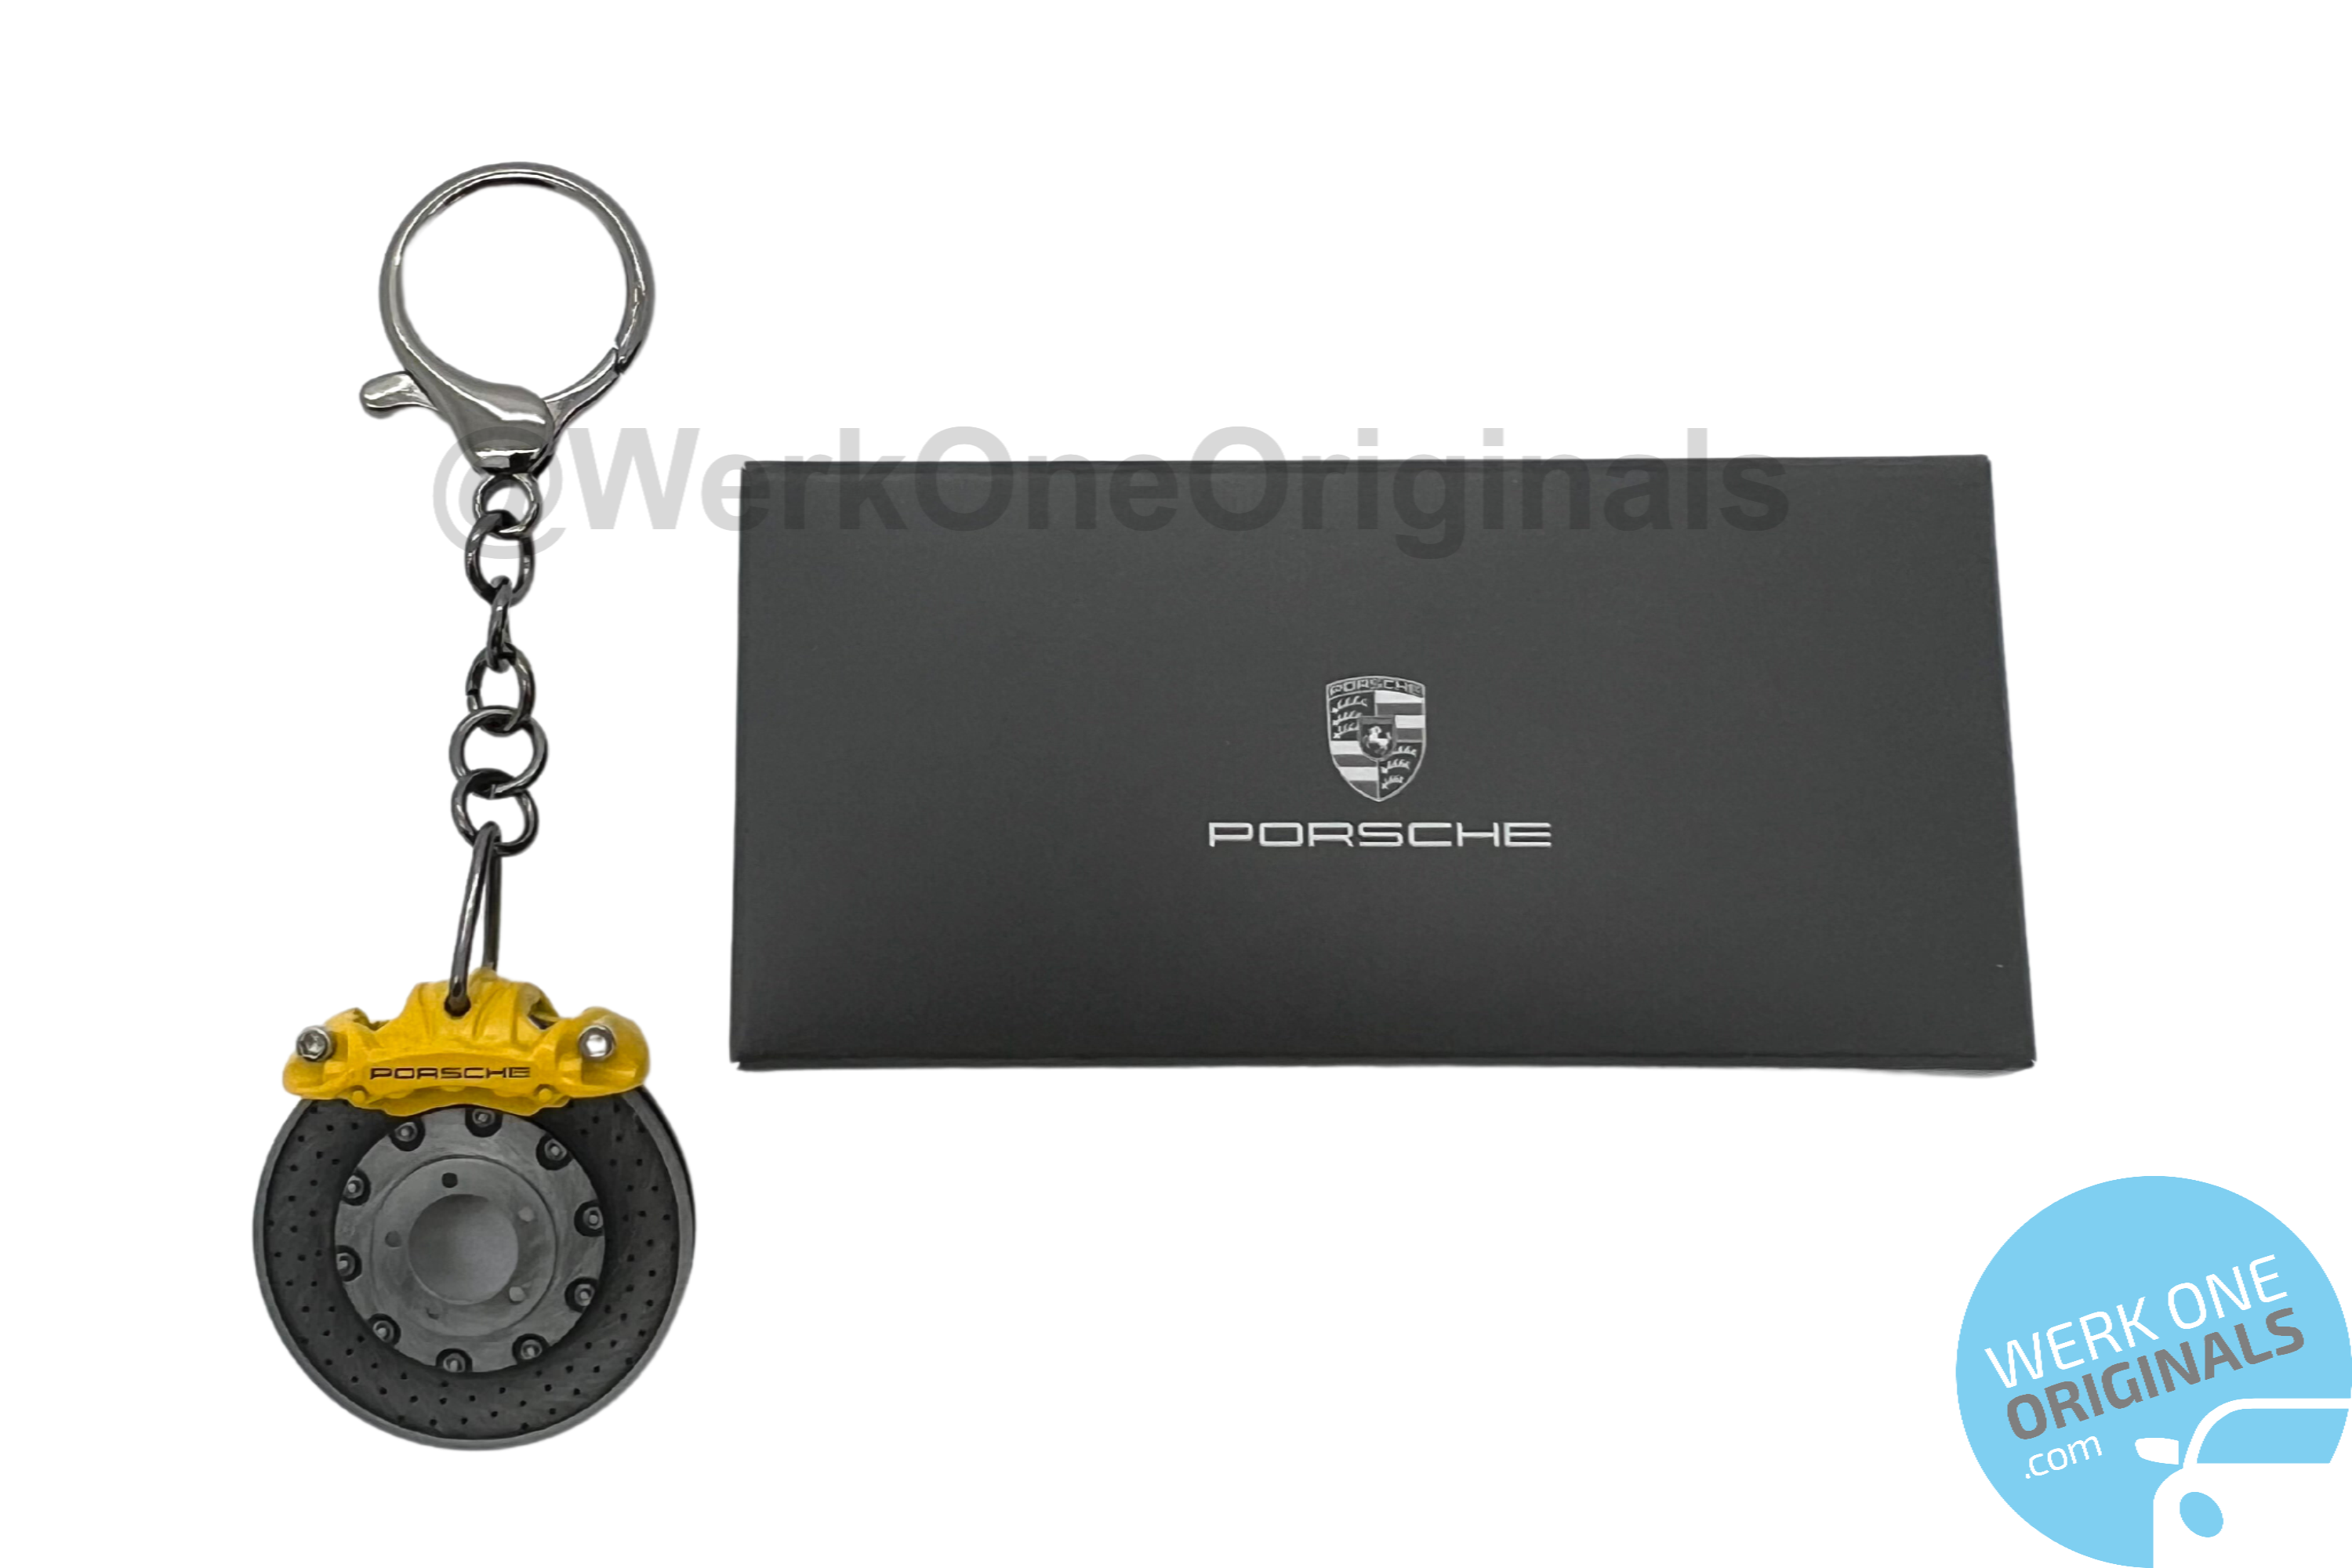 Porsche Ceramic Brake Disc & Caliper Key Fob in Yellow